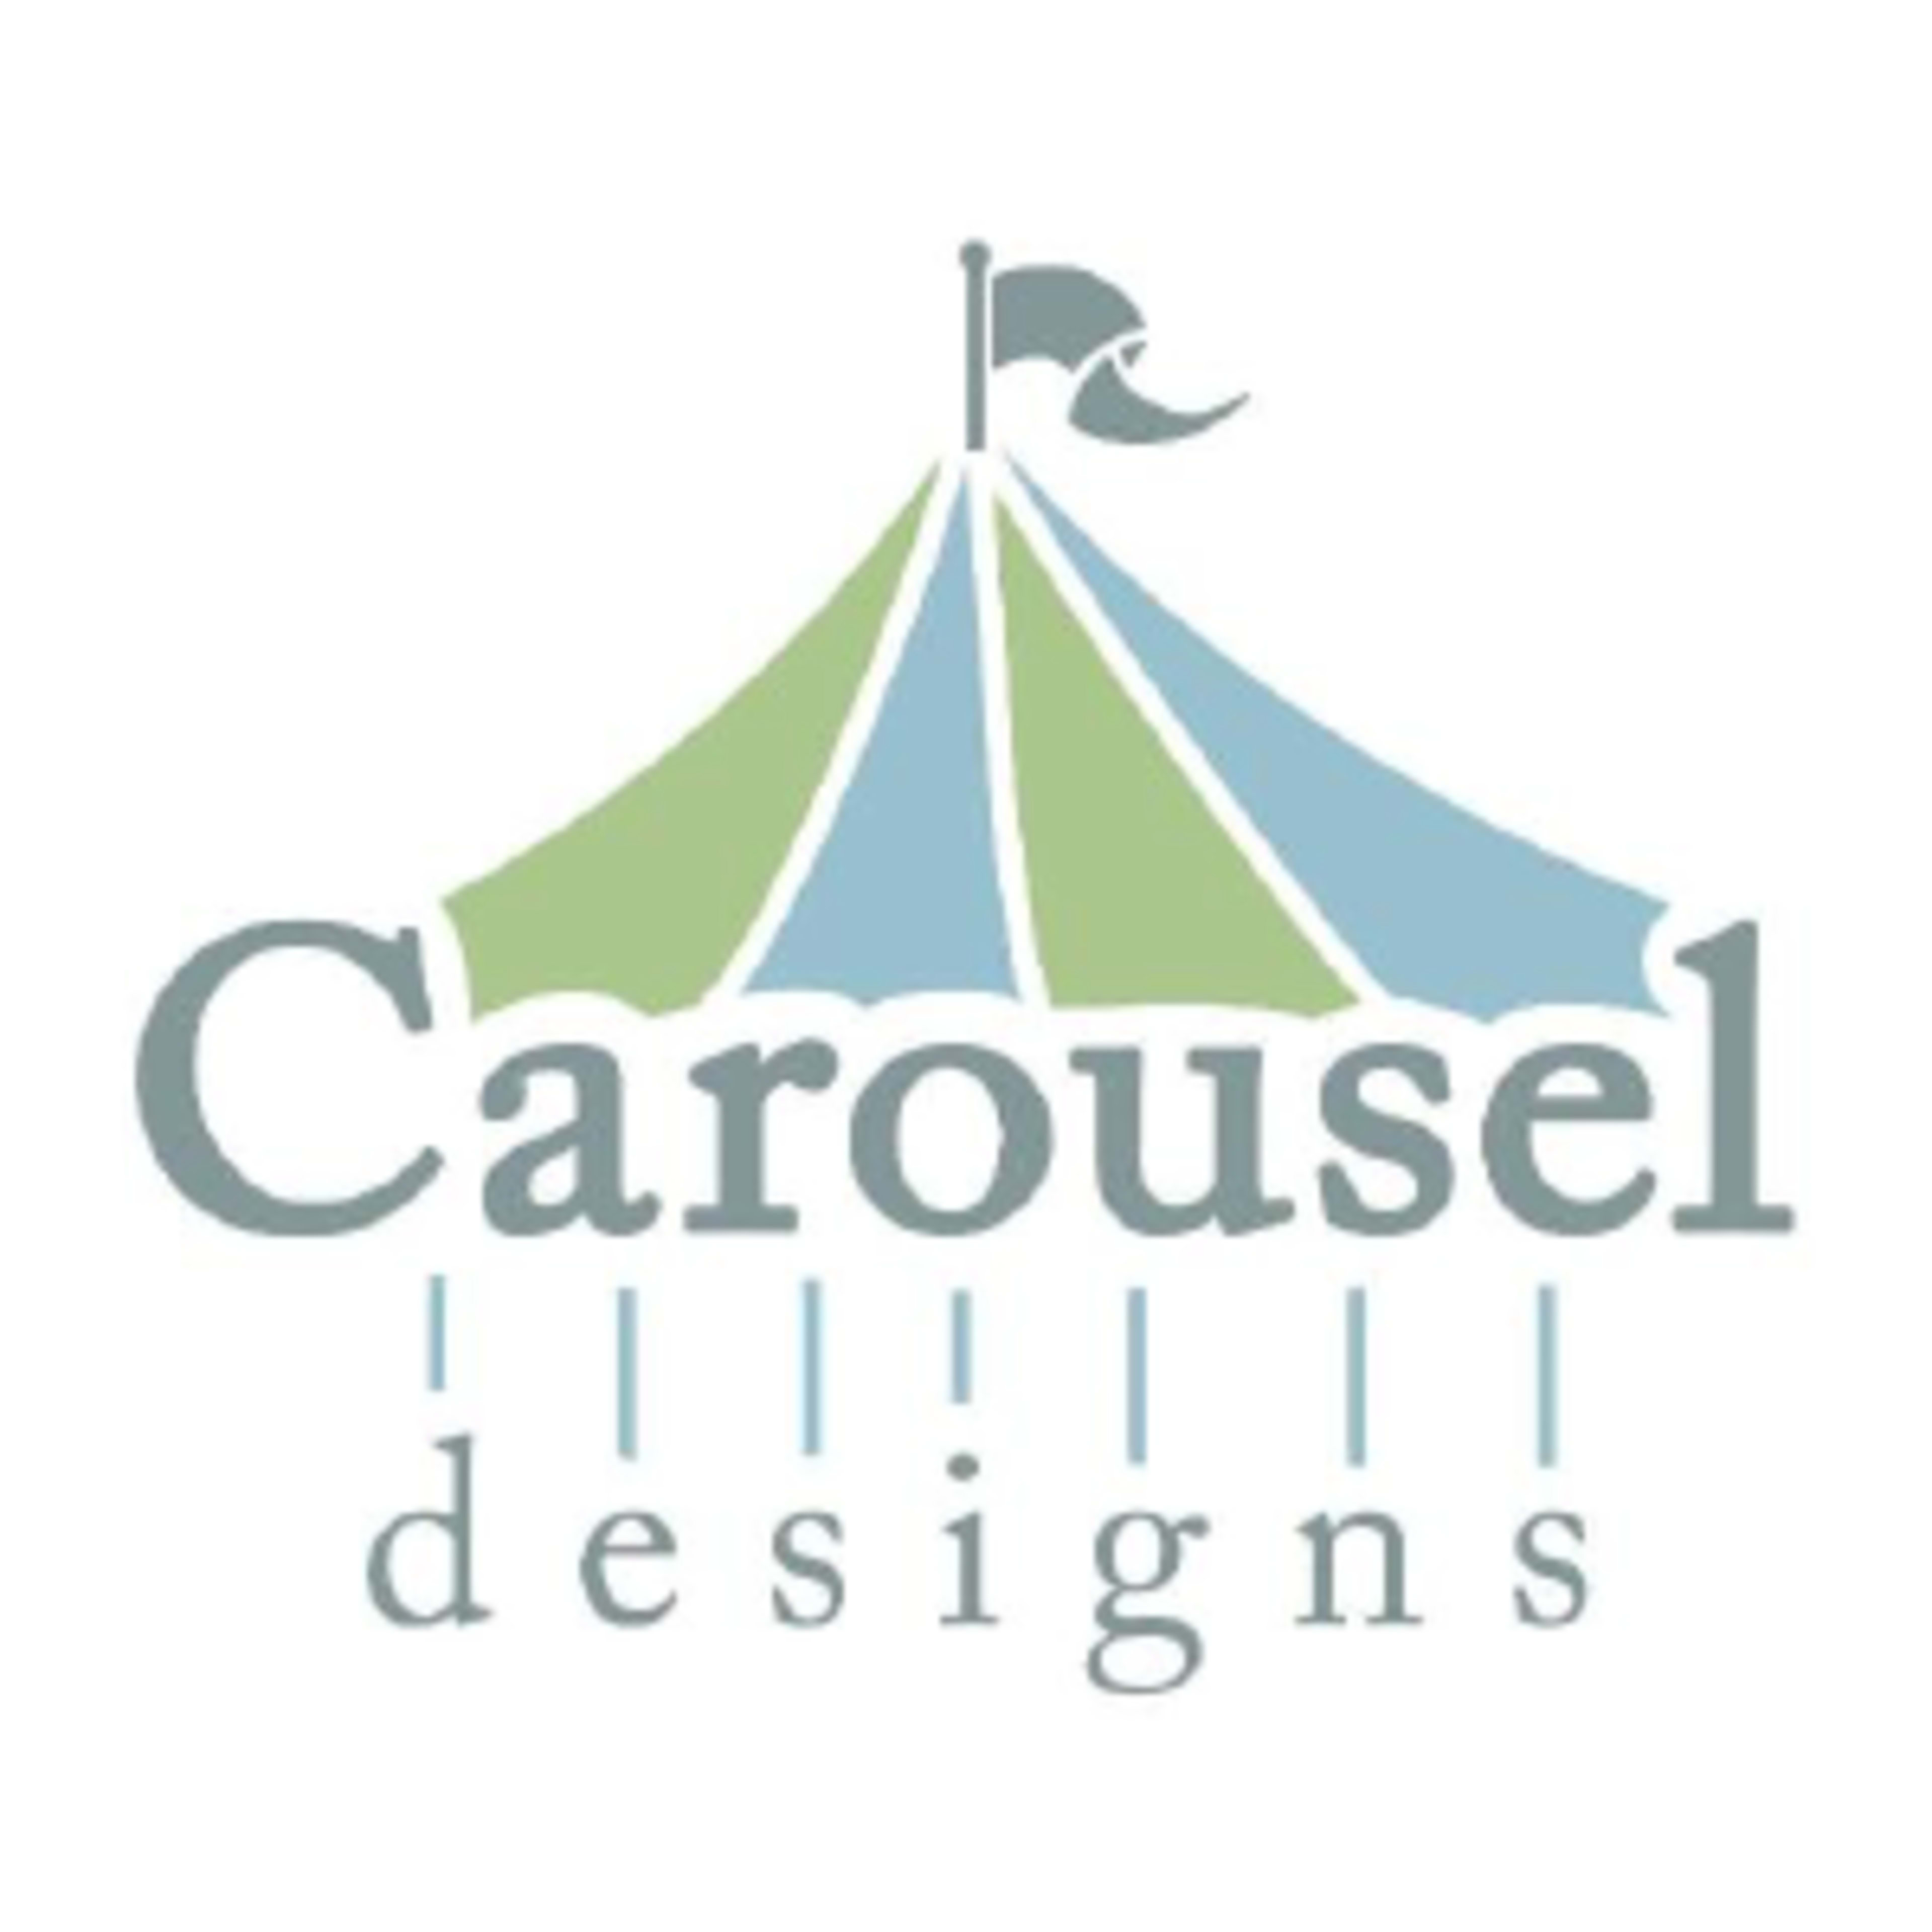 Carousel DesignsCode